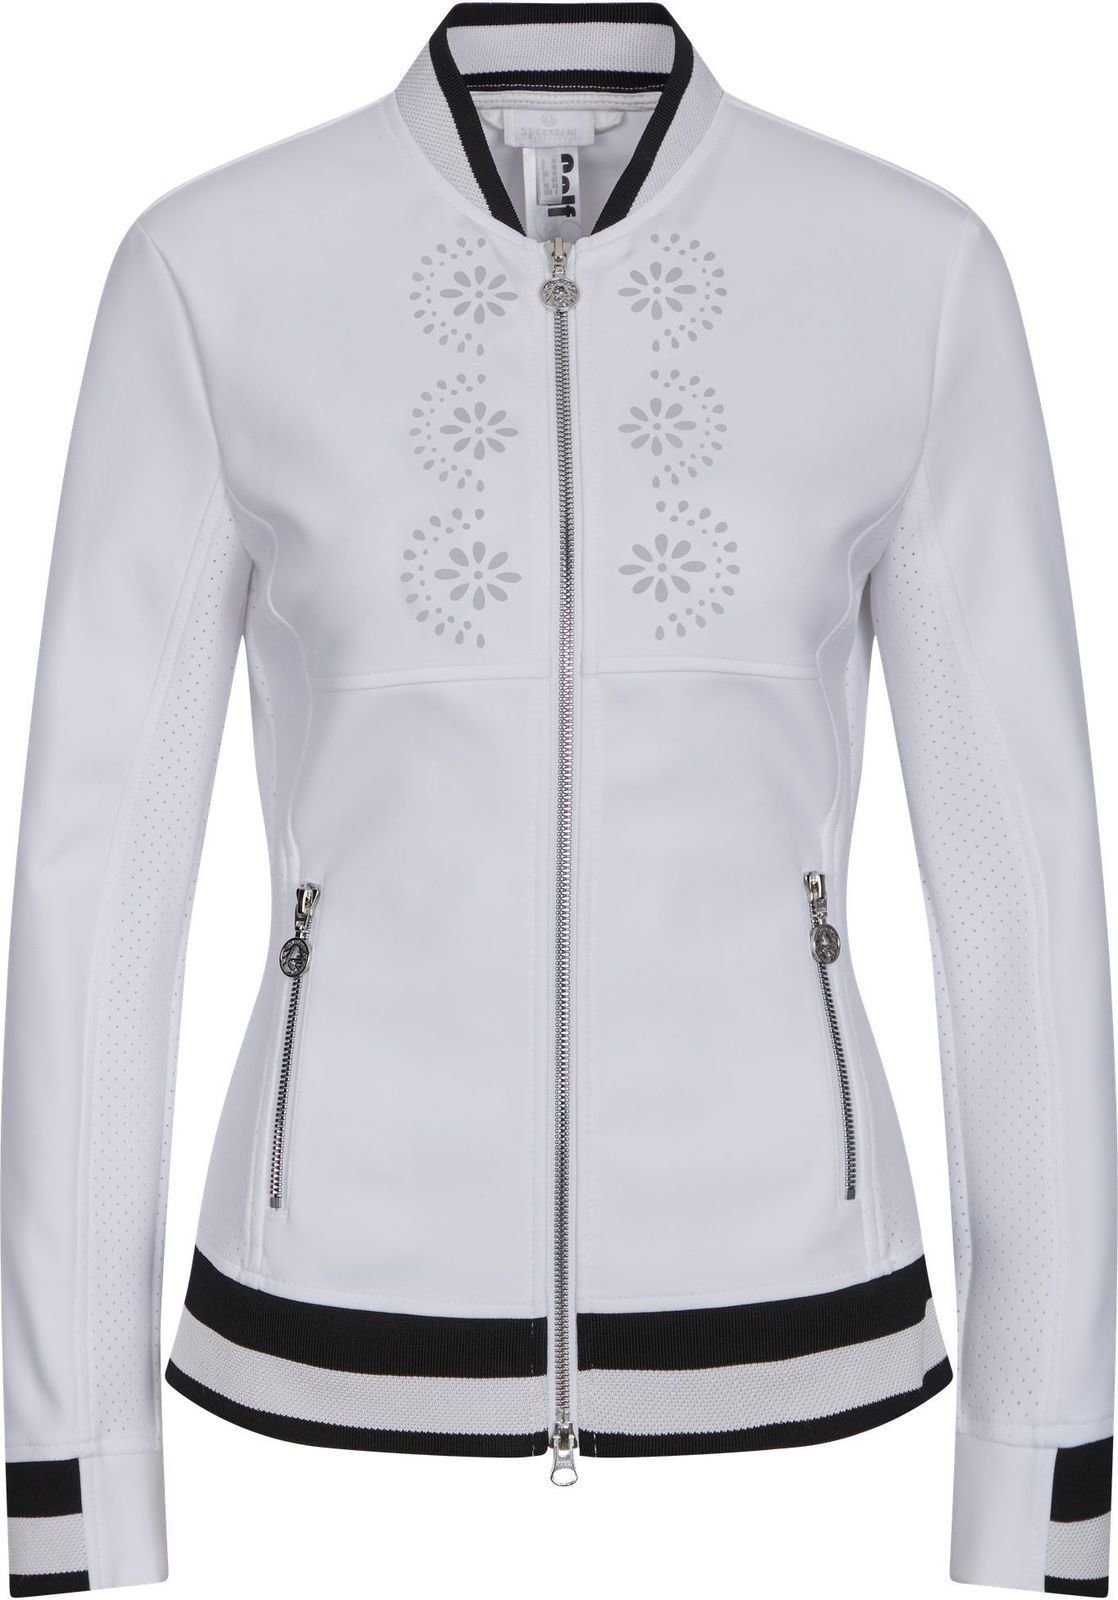 Veste Sportalm Beauty Womens Jacket Optical White 34